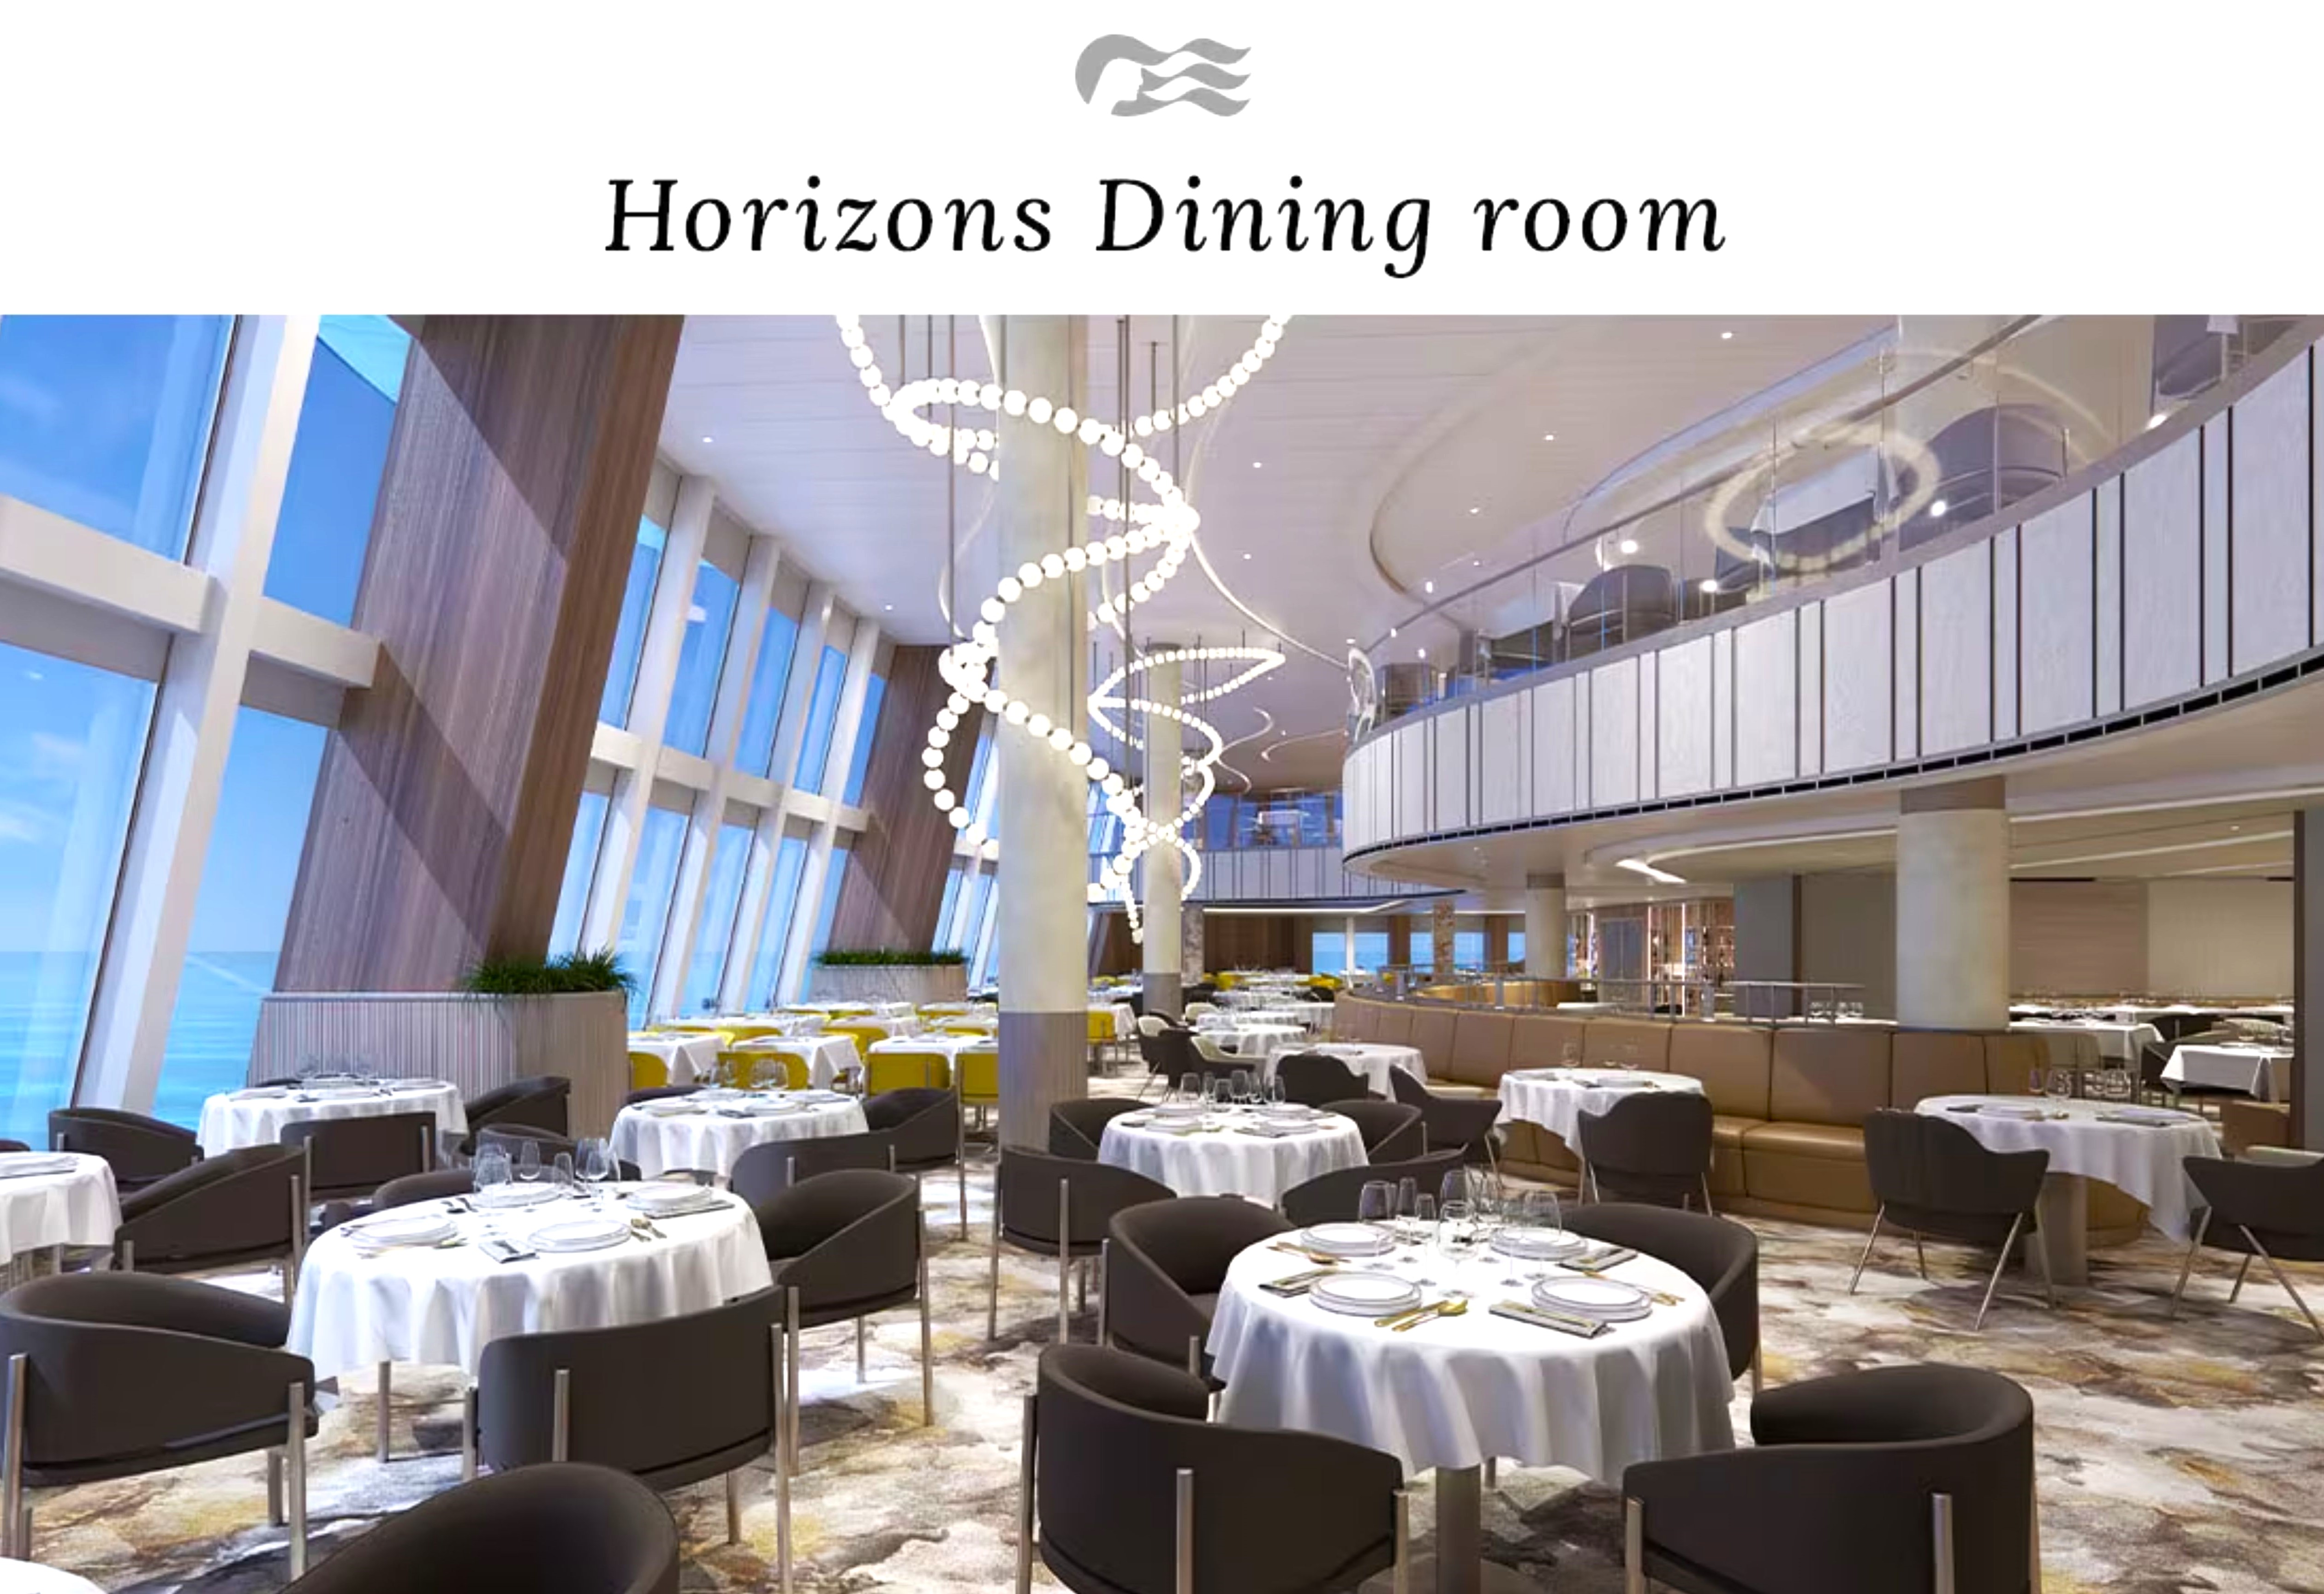 Horizons Dining Room